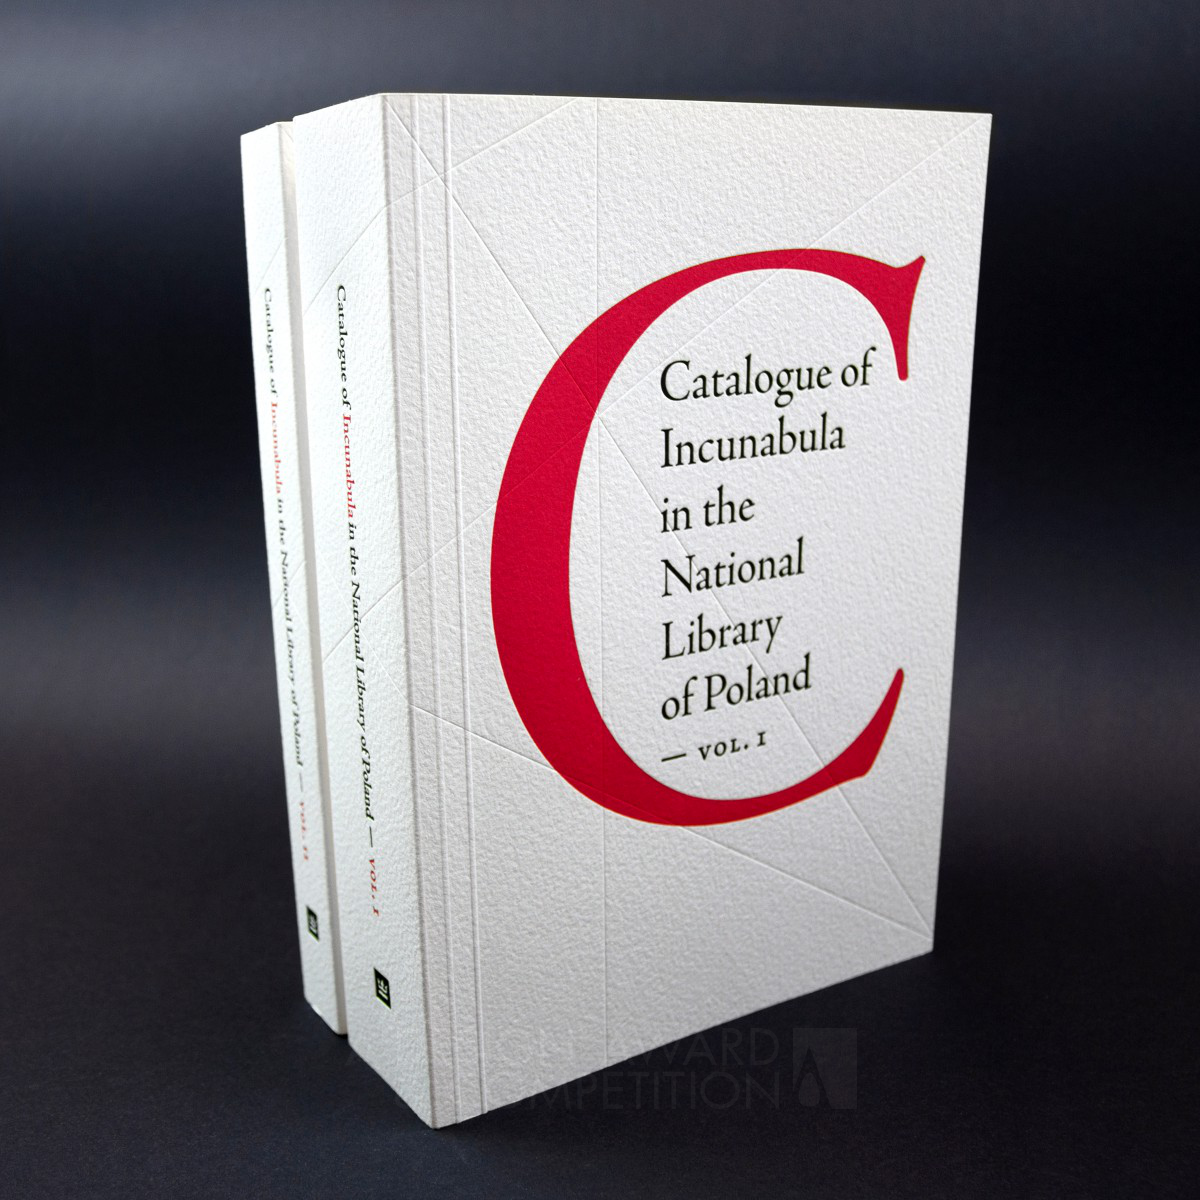 Catalogue of Incunabula Book Series by Aleksandra Toborowicz